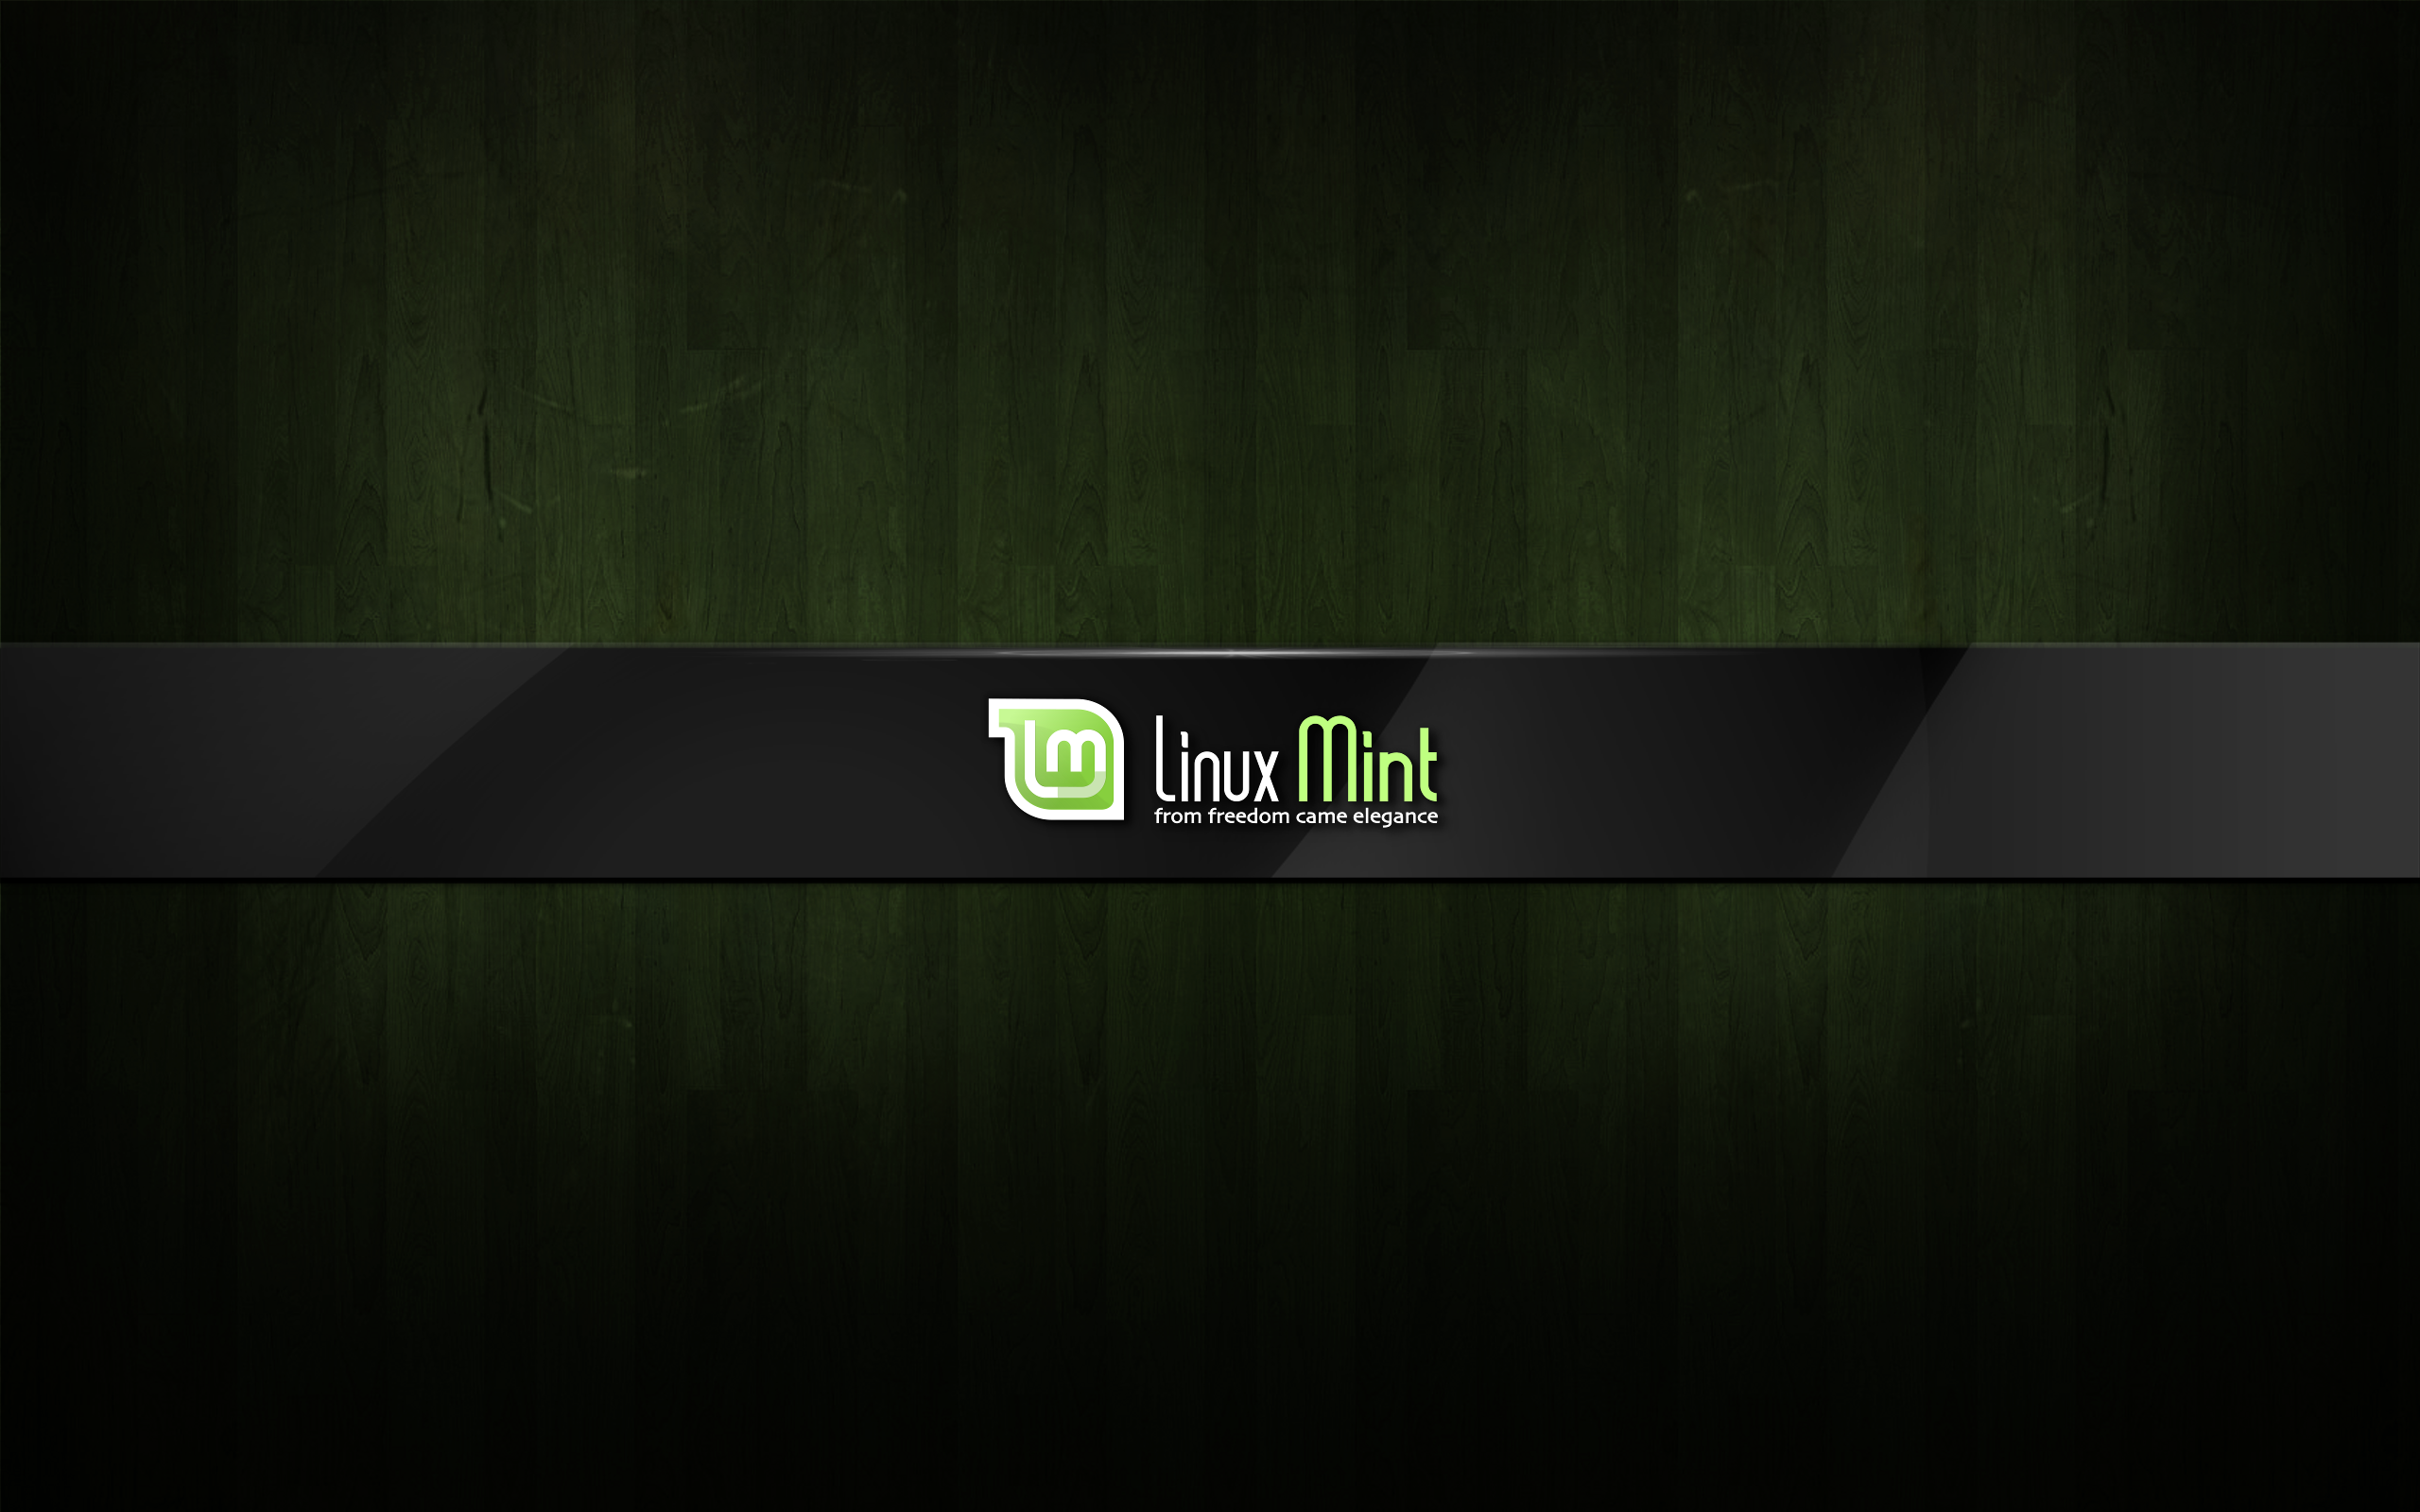 More Linux Mint And Ubuntu Wallpaper